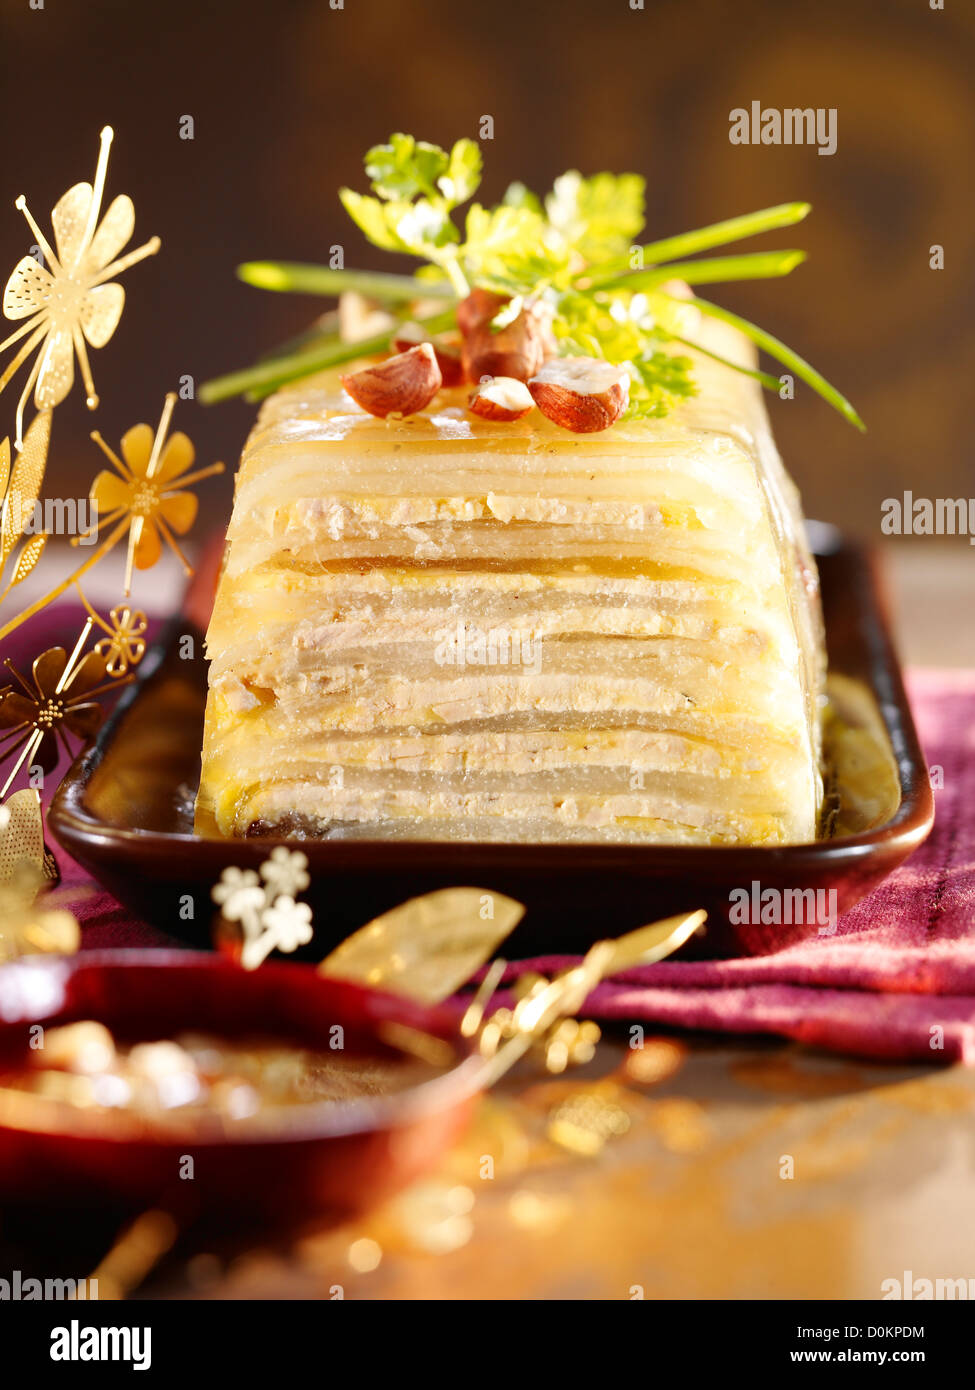 Foie gras terrine with apples Stock Photo